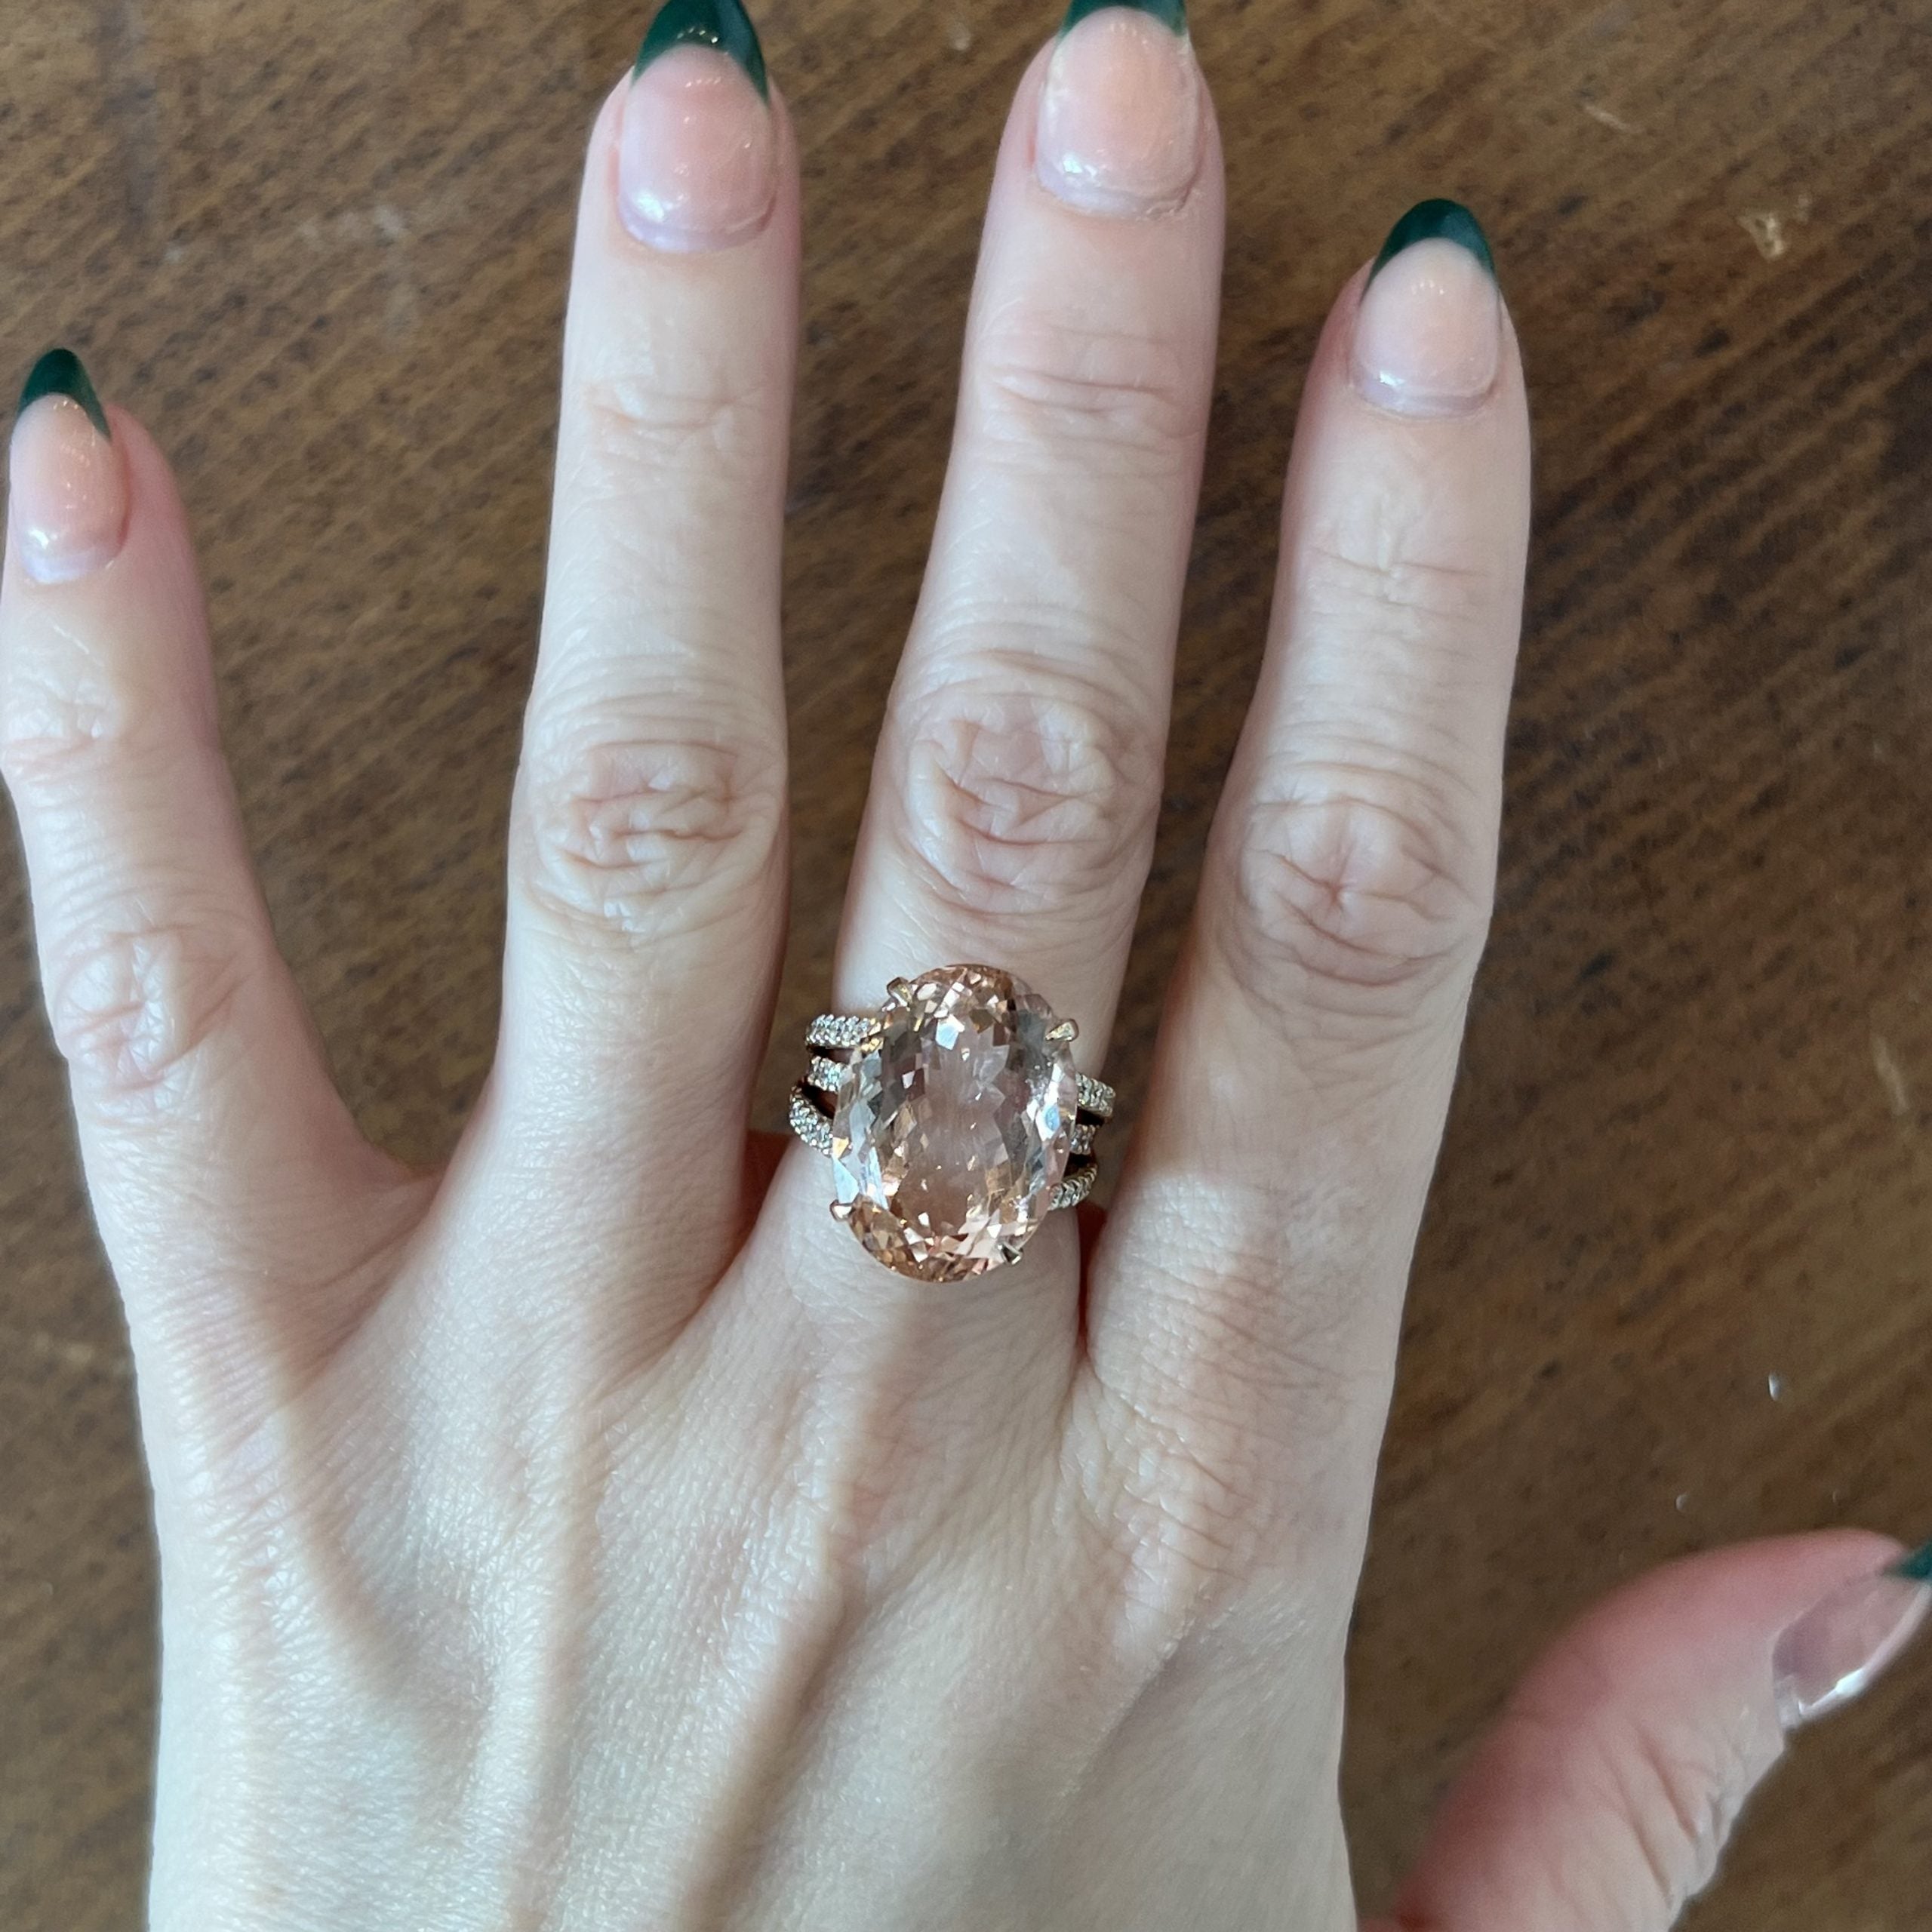 Huge Sale 2 carat 7x5mm Emerald Cut Morganite Diamond Moissanite Bridal  Wedding Ring Set with 18k Gold Plating - Walmart.com